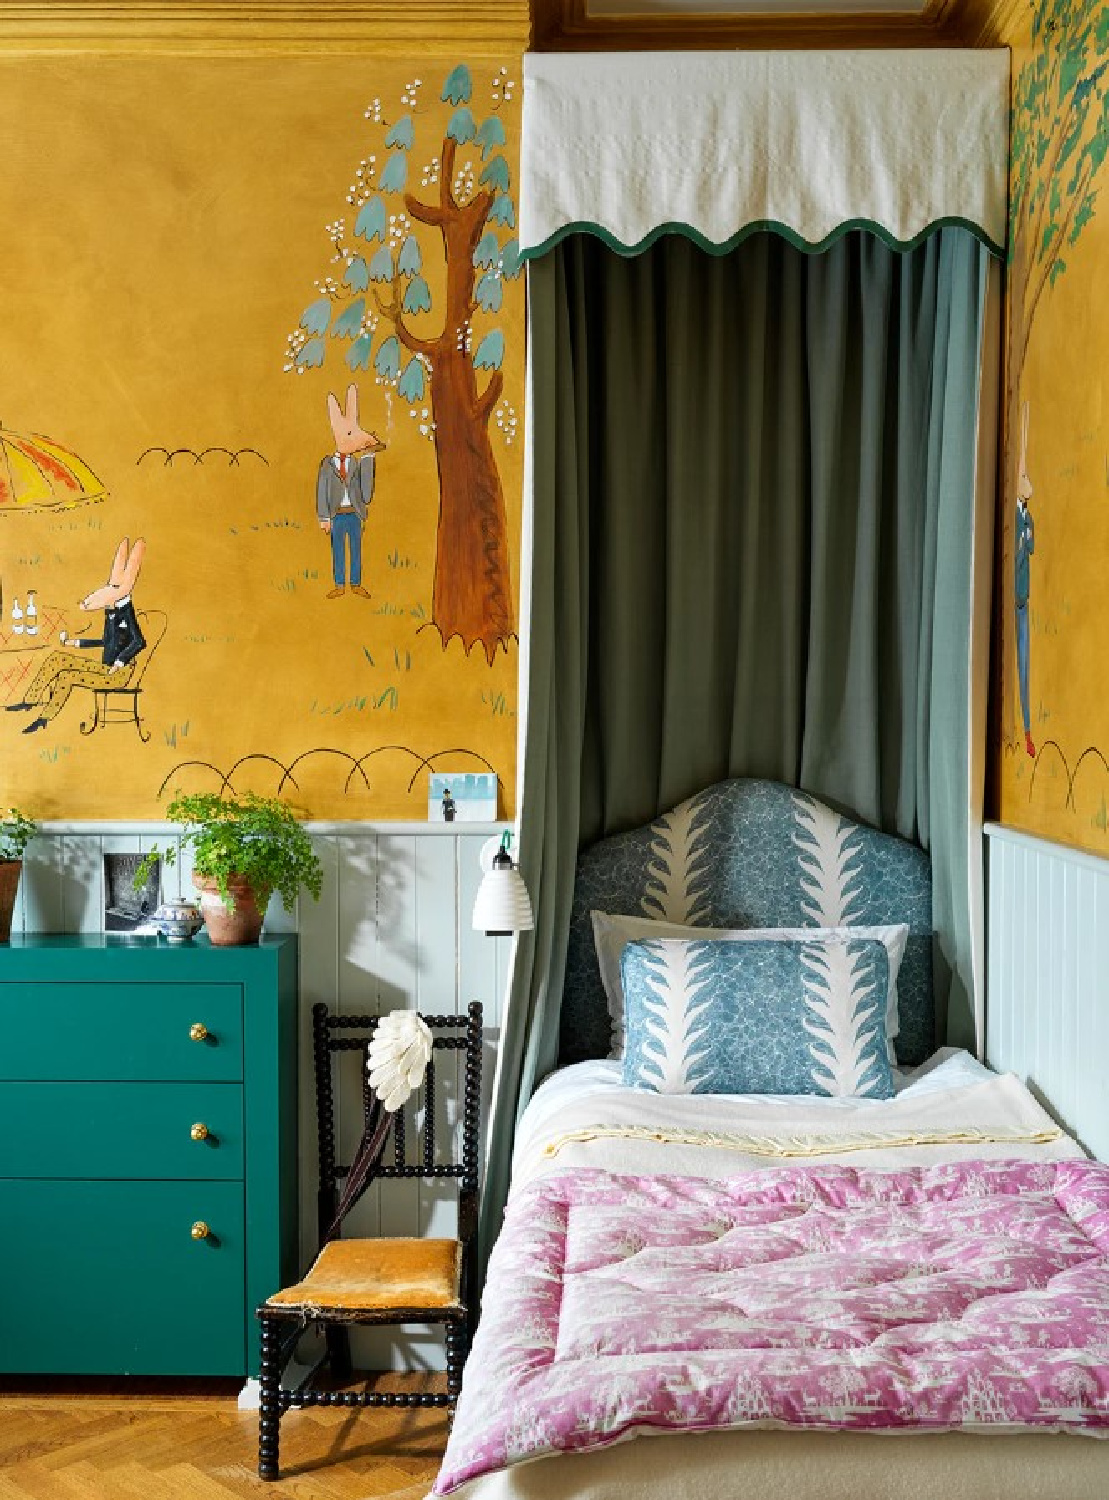 Beautiful child's bedroom with mural inspired by Ludwig Bemelmans - Simon Brown photo and Beata Heuman interior design. #beataheuman #swedishfarmhouse